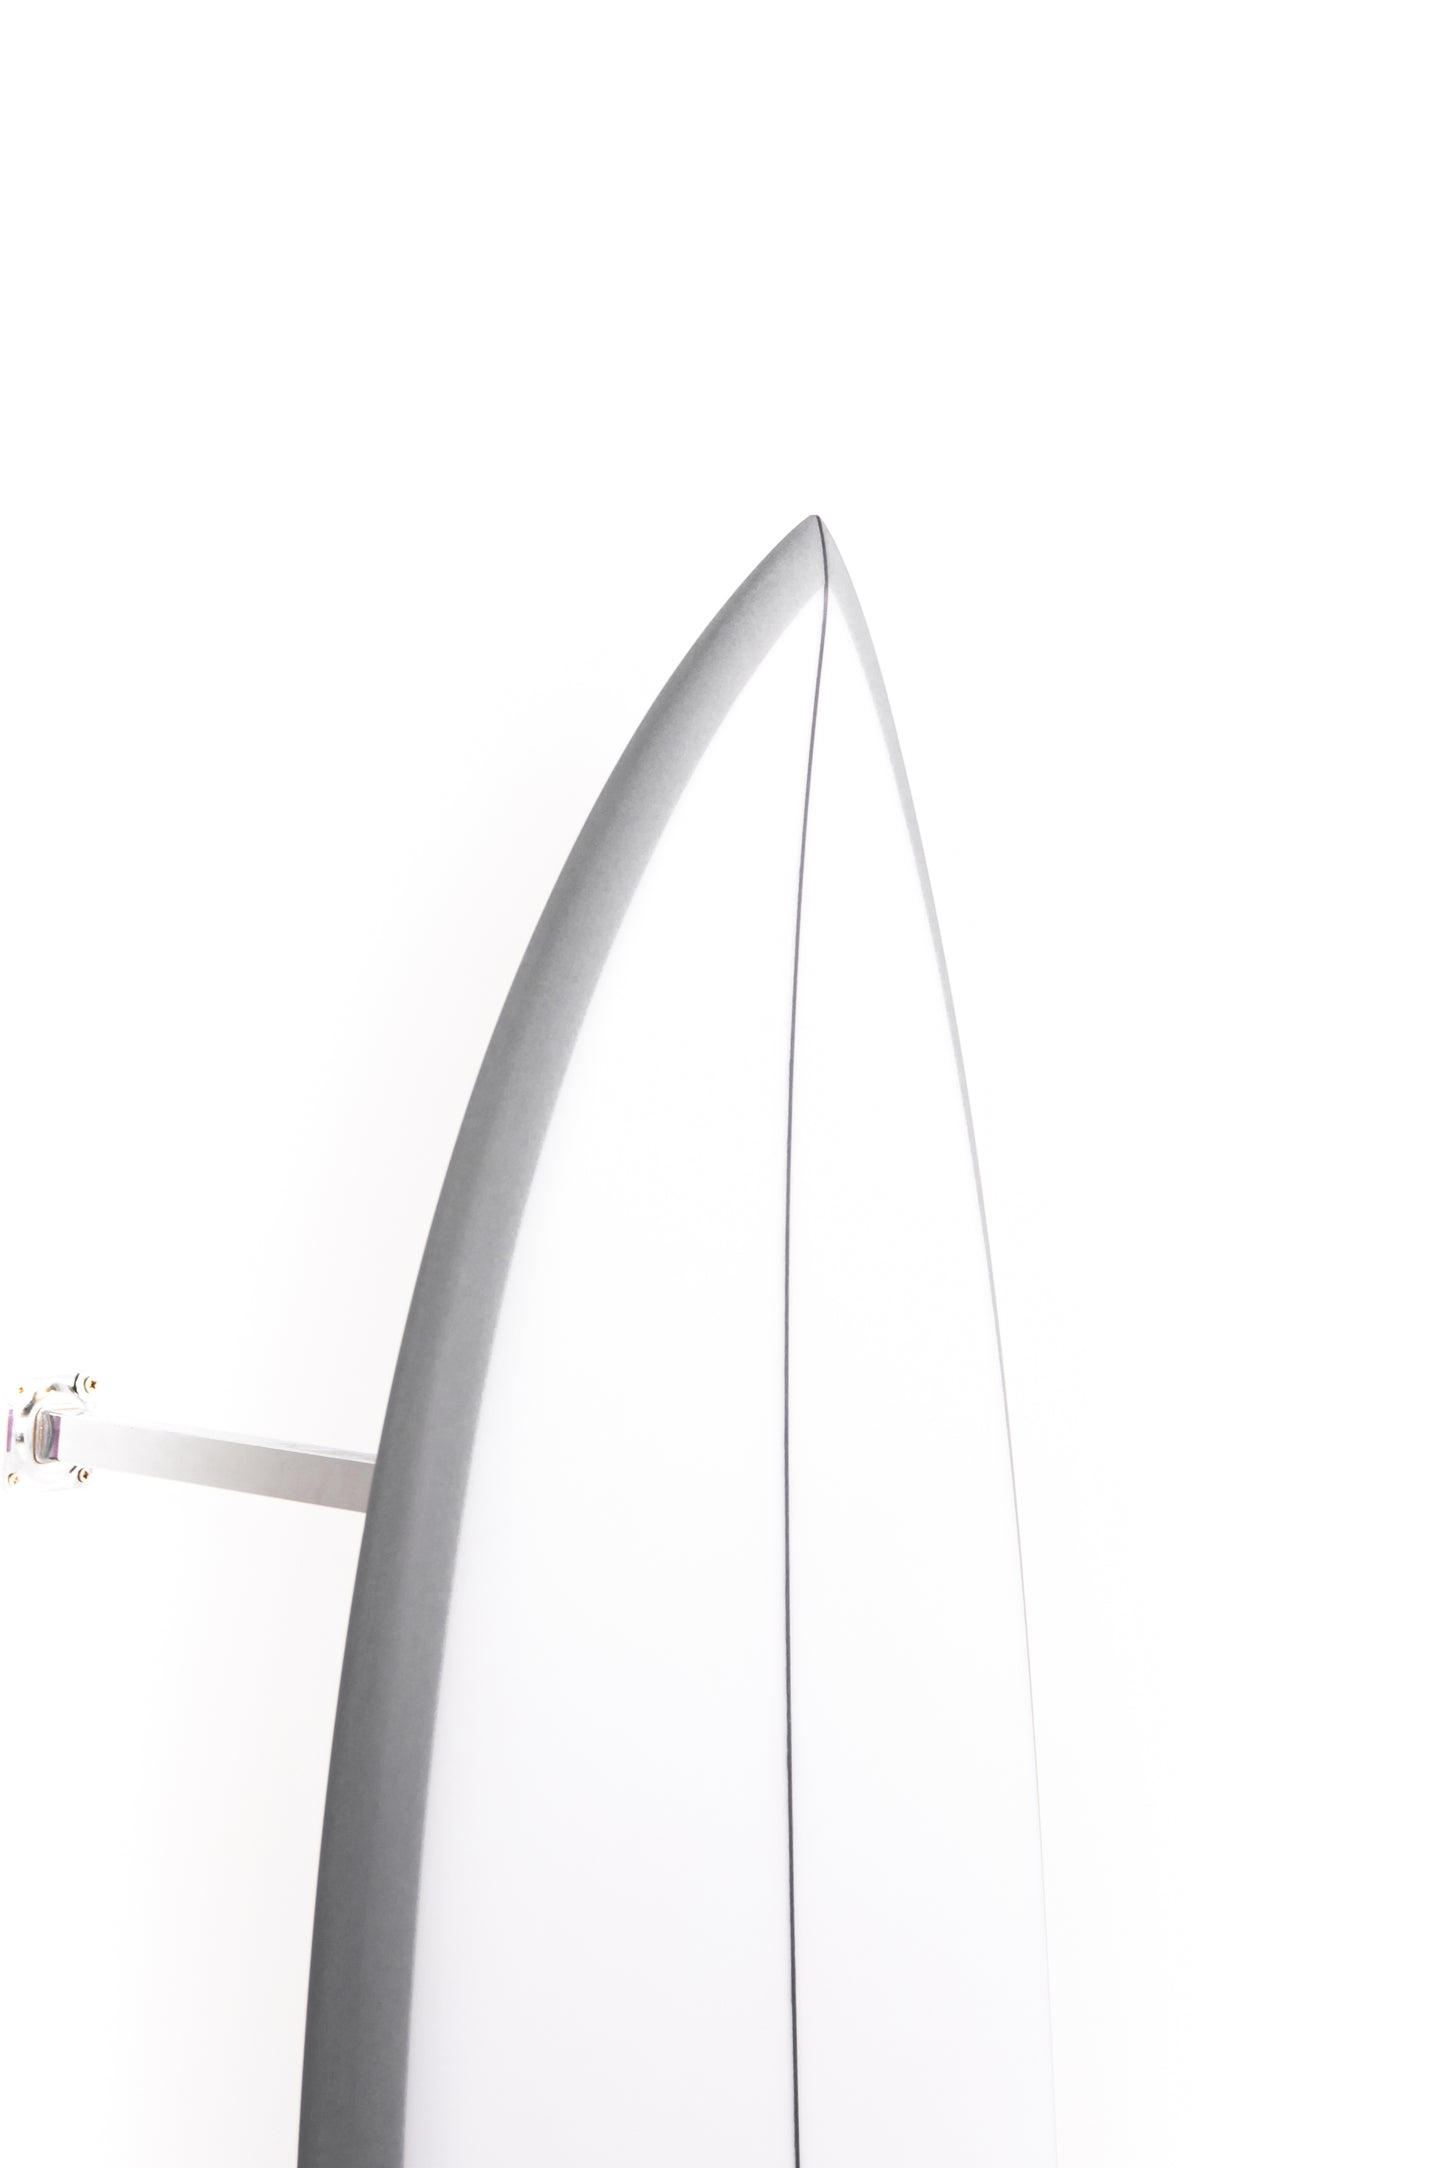 
                  
                    Christenson Surfboards - LANE SPLITTER - 5'7" x 19 5/8 x 2 1/2 - 30,14L - CX05822
                  
                